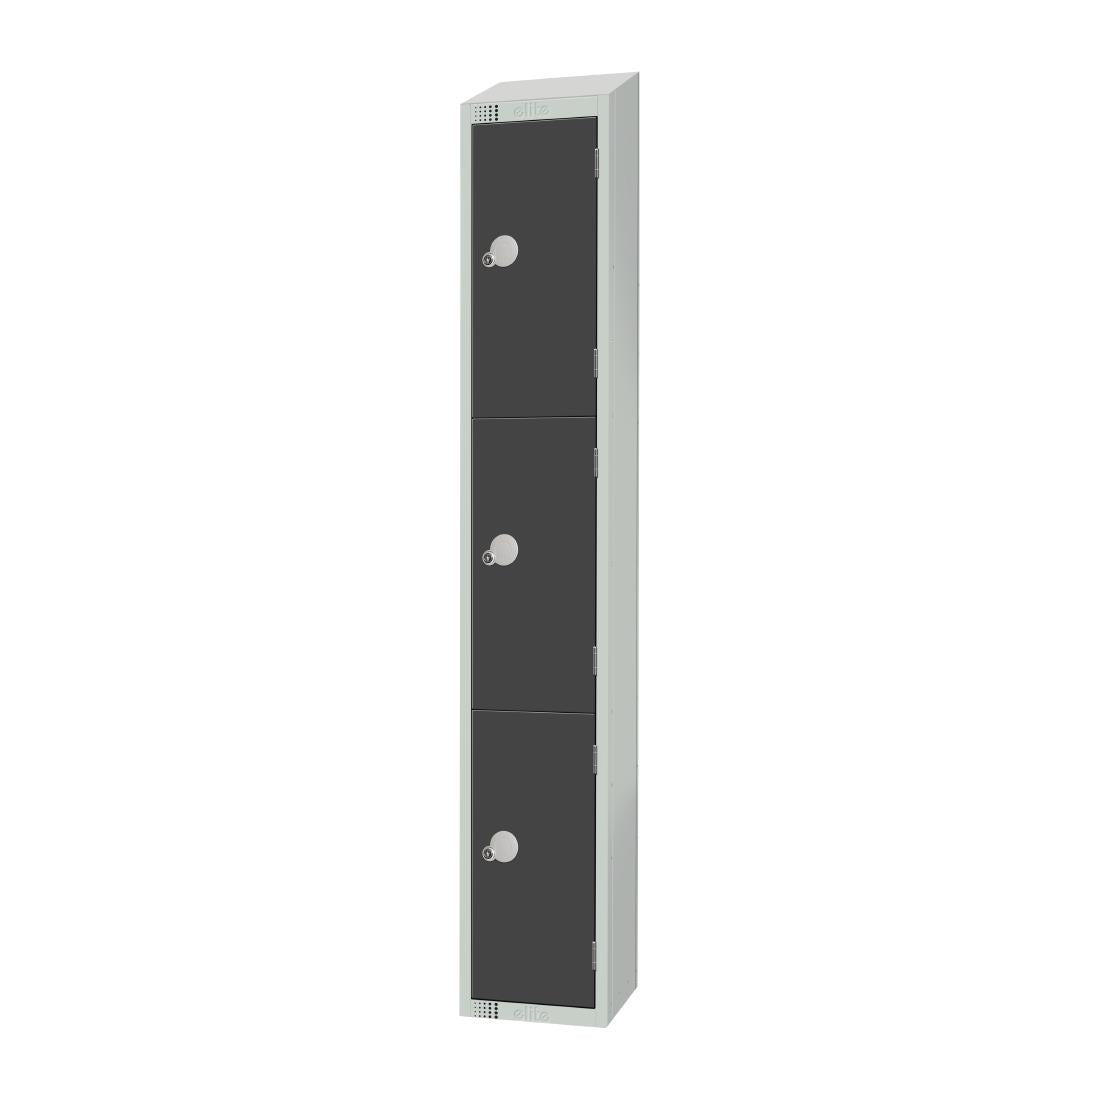 GR679-ELS Elite Three Door Electronic Combination Locker with Sloping Top Graphite Grey JD Catering Equipment Solutions Ltd